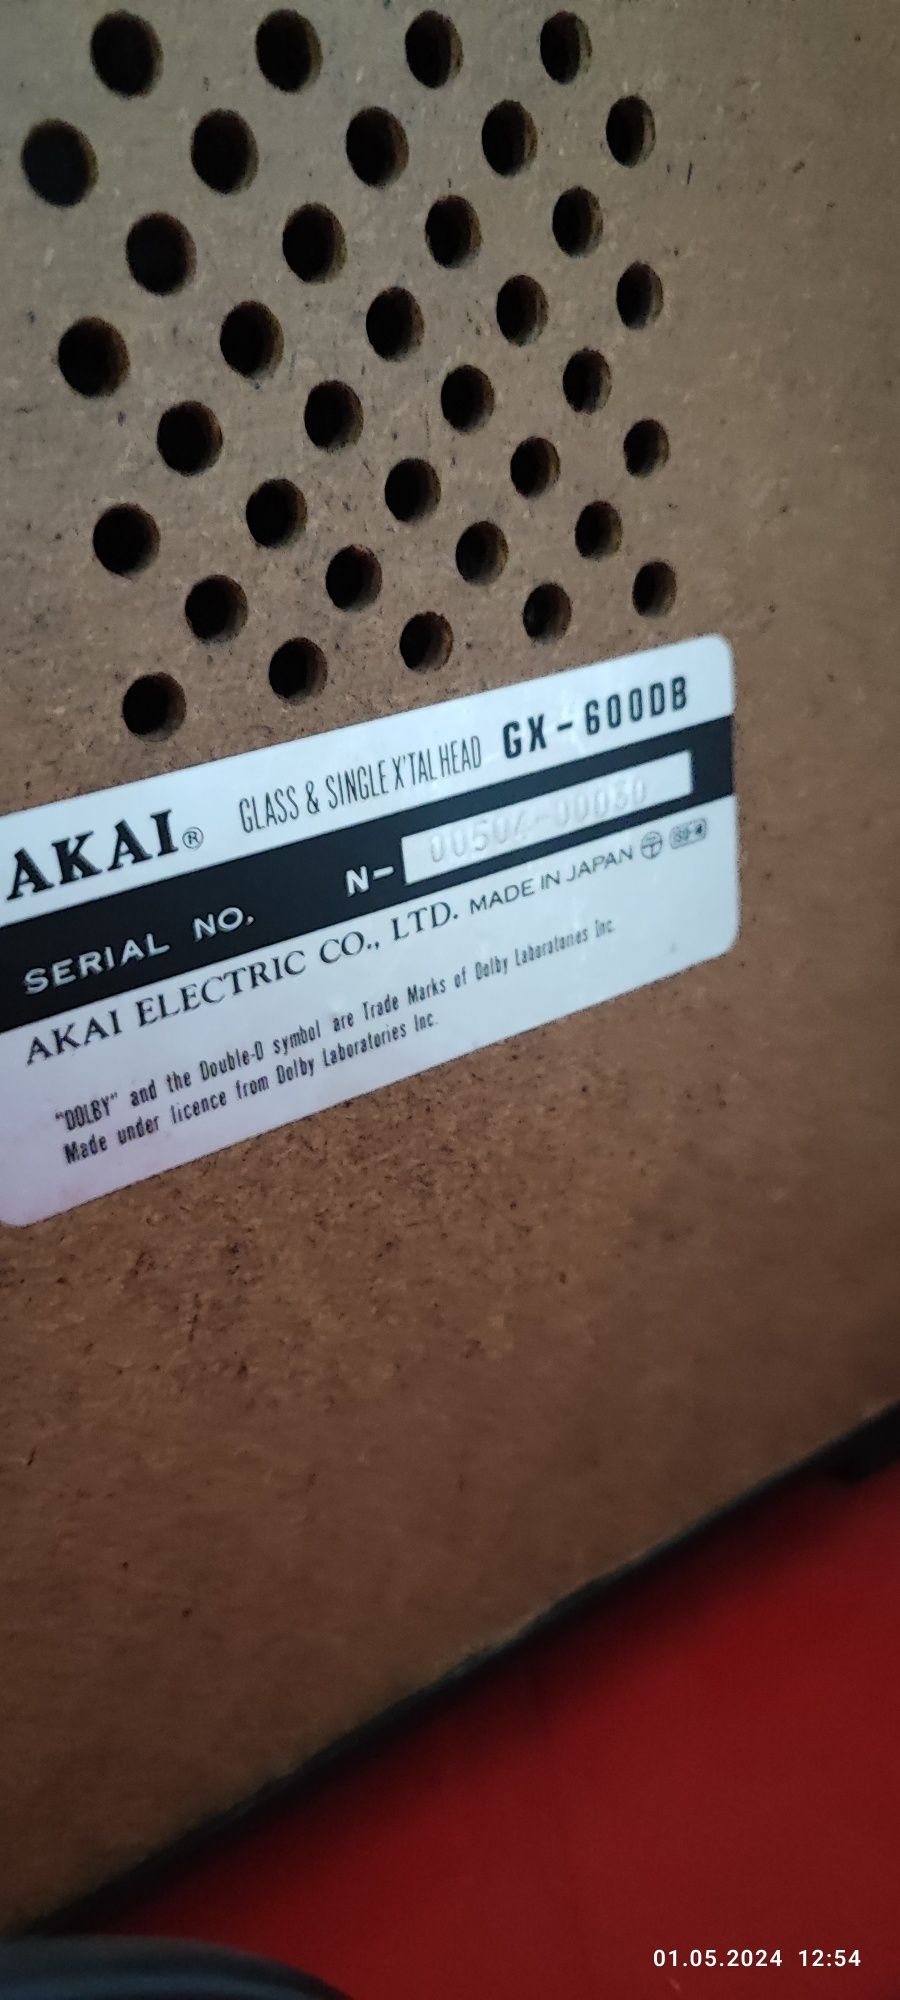 Vând magnetofon Akai gx 600db convenabil